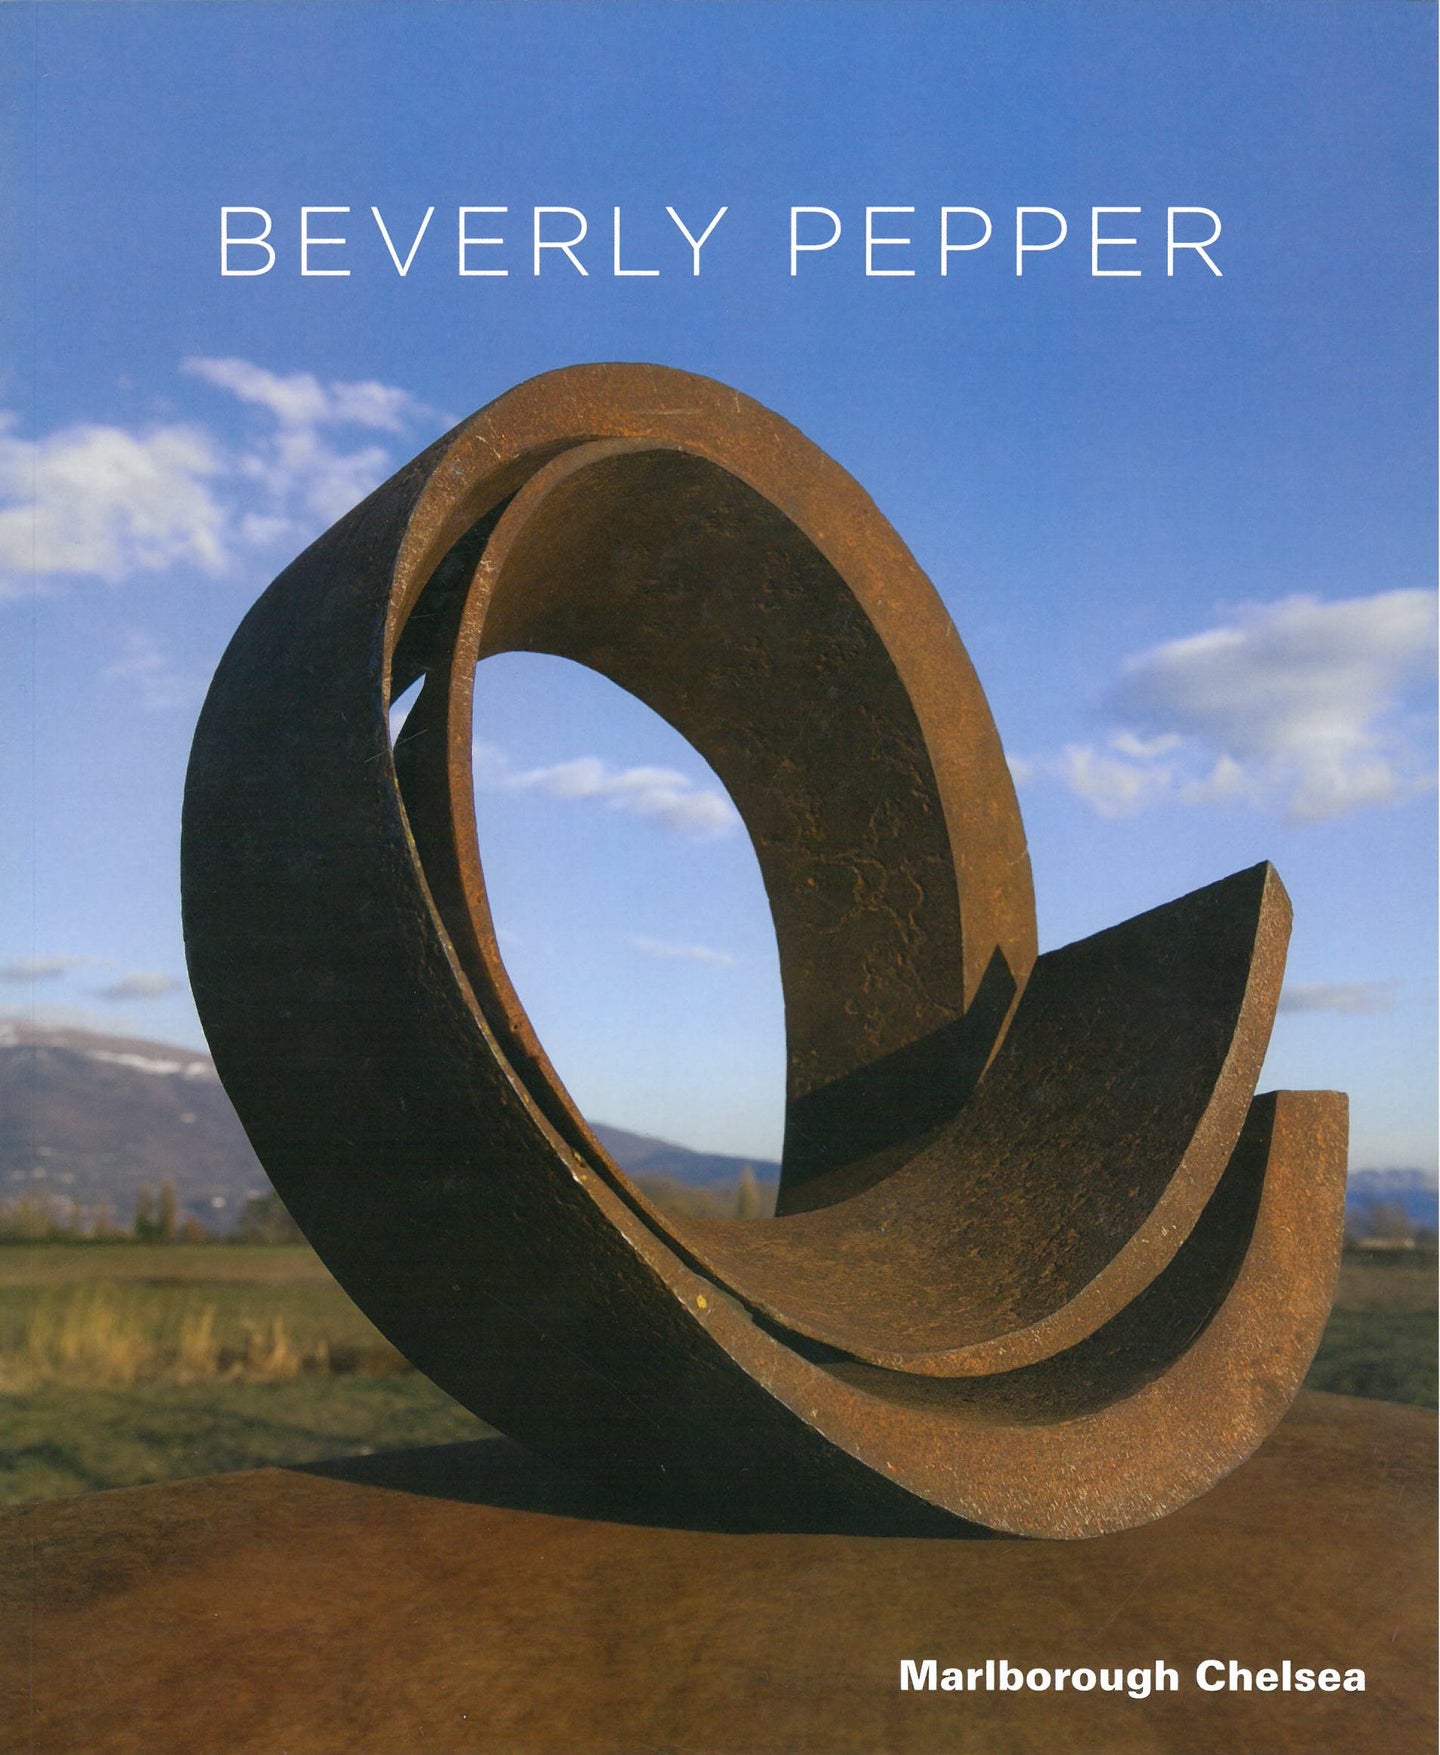 Pepper catalogue cover featuring a steel sculpture